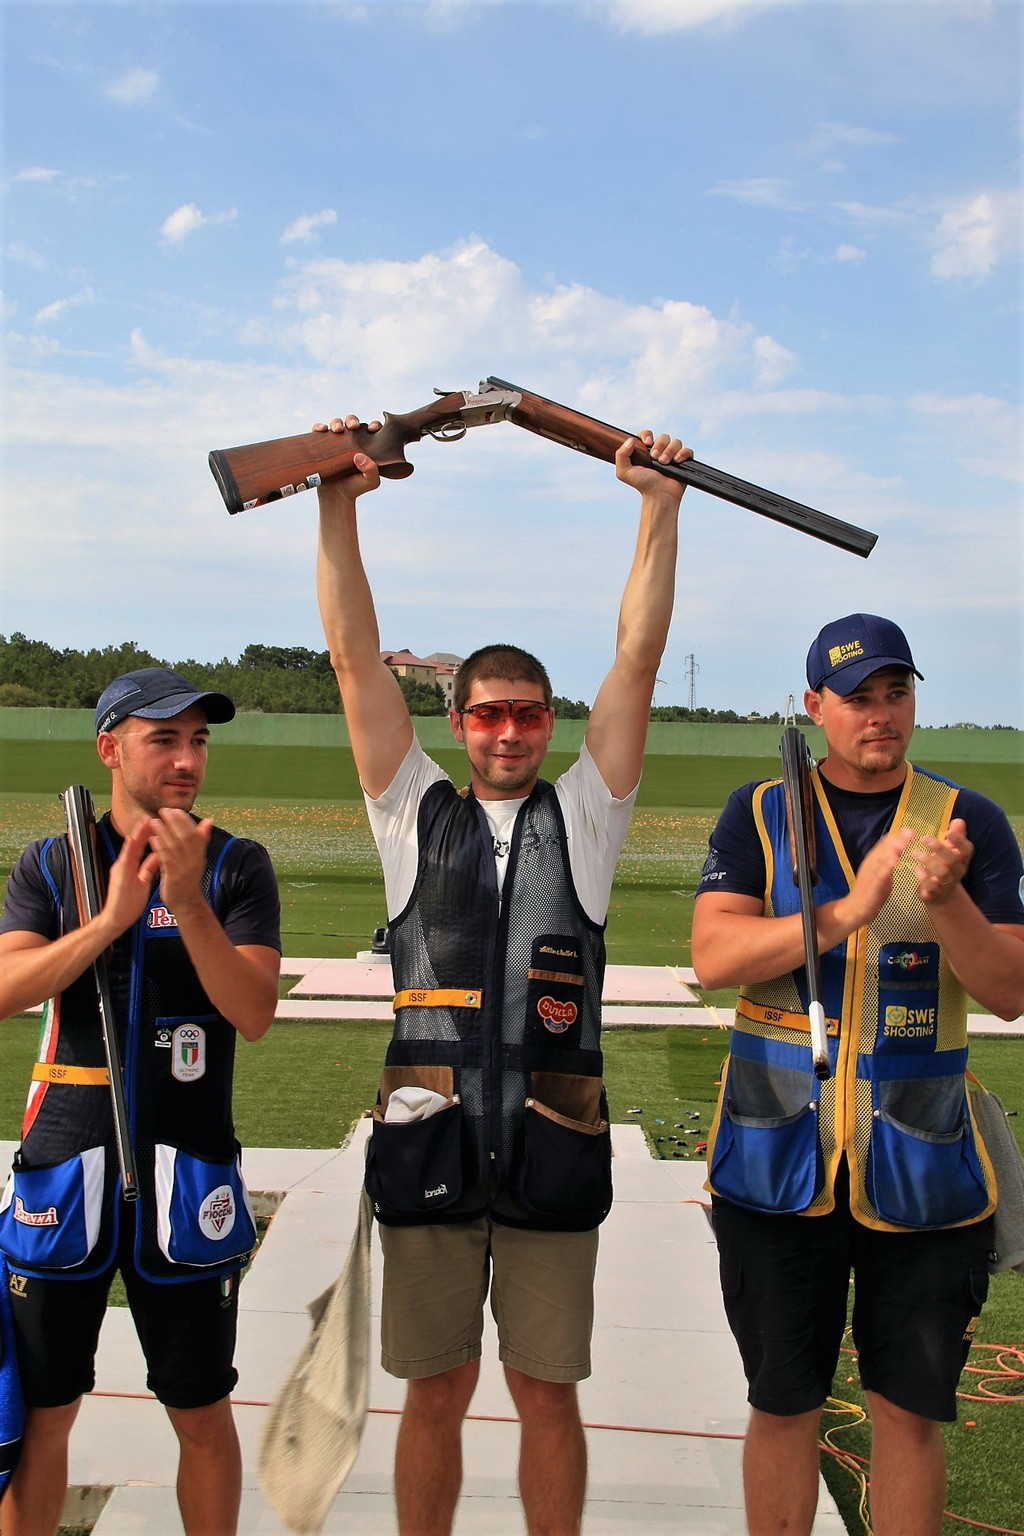 Czech Republic’s Milos Slavicek won the men's skeet event ©European Shooting Confederation